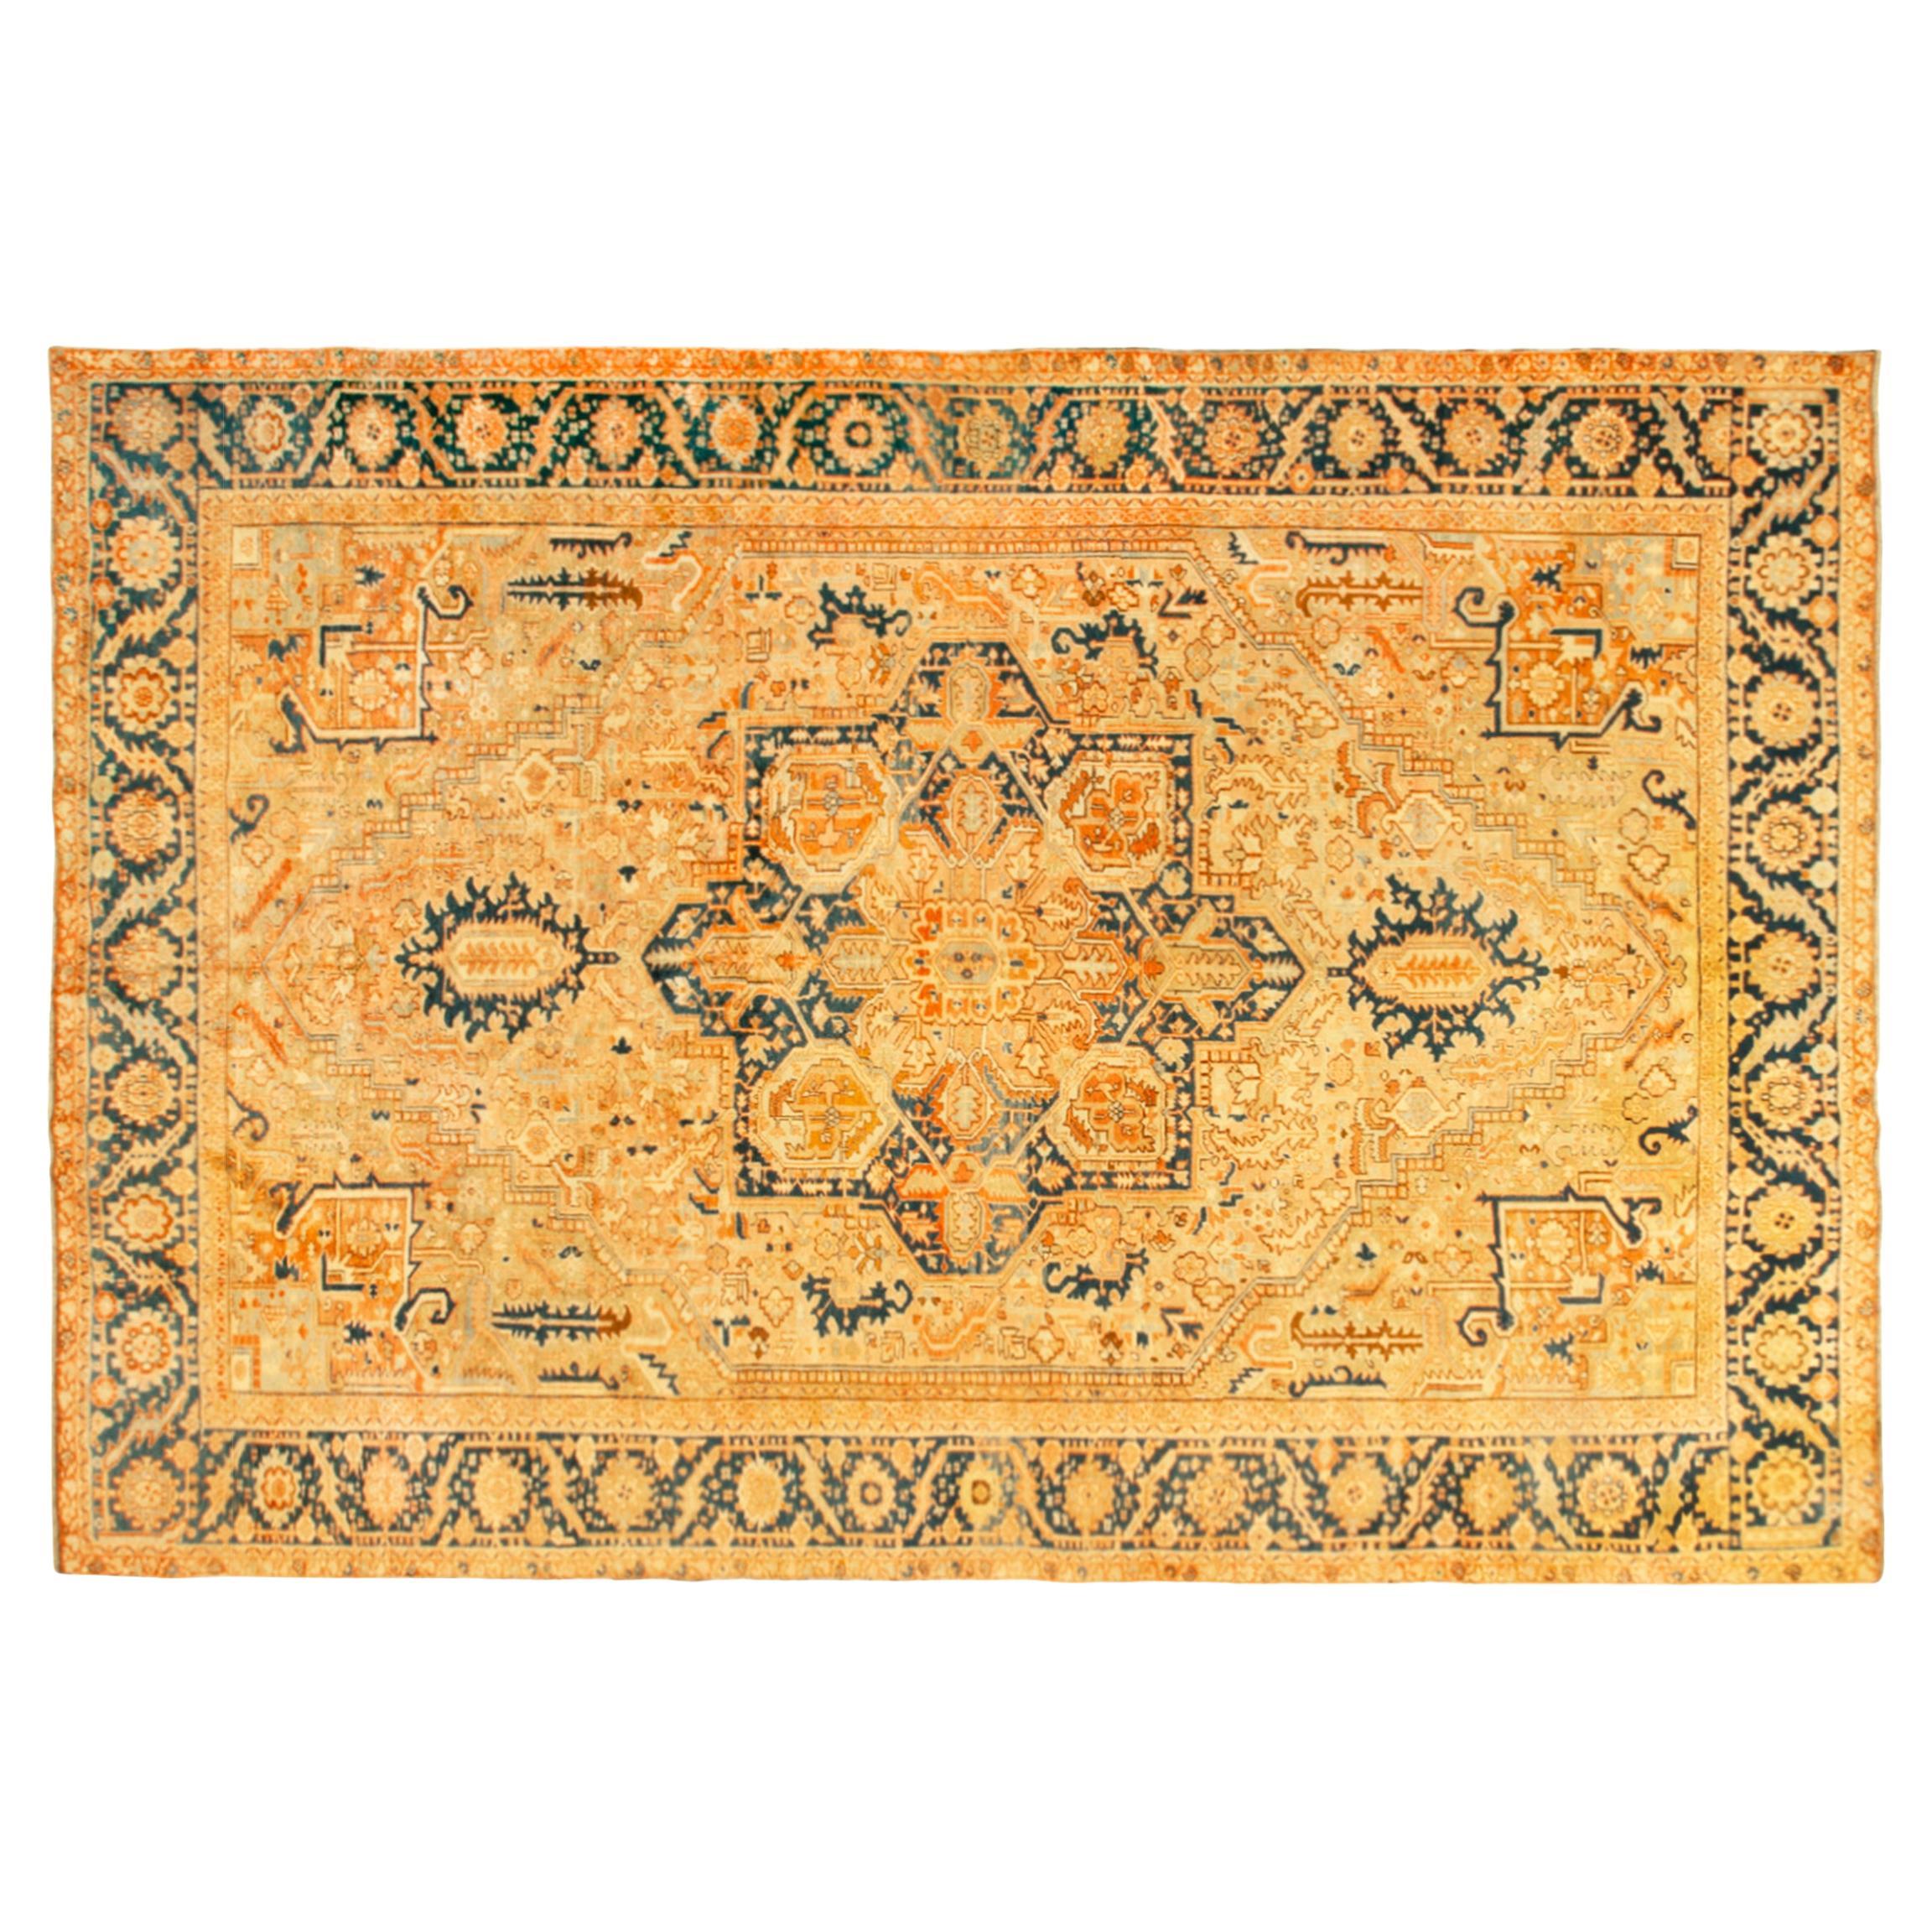 Antique Persian Decorative Oriental Heriz Rug in Large Size